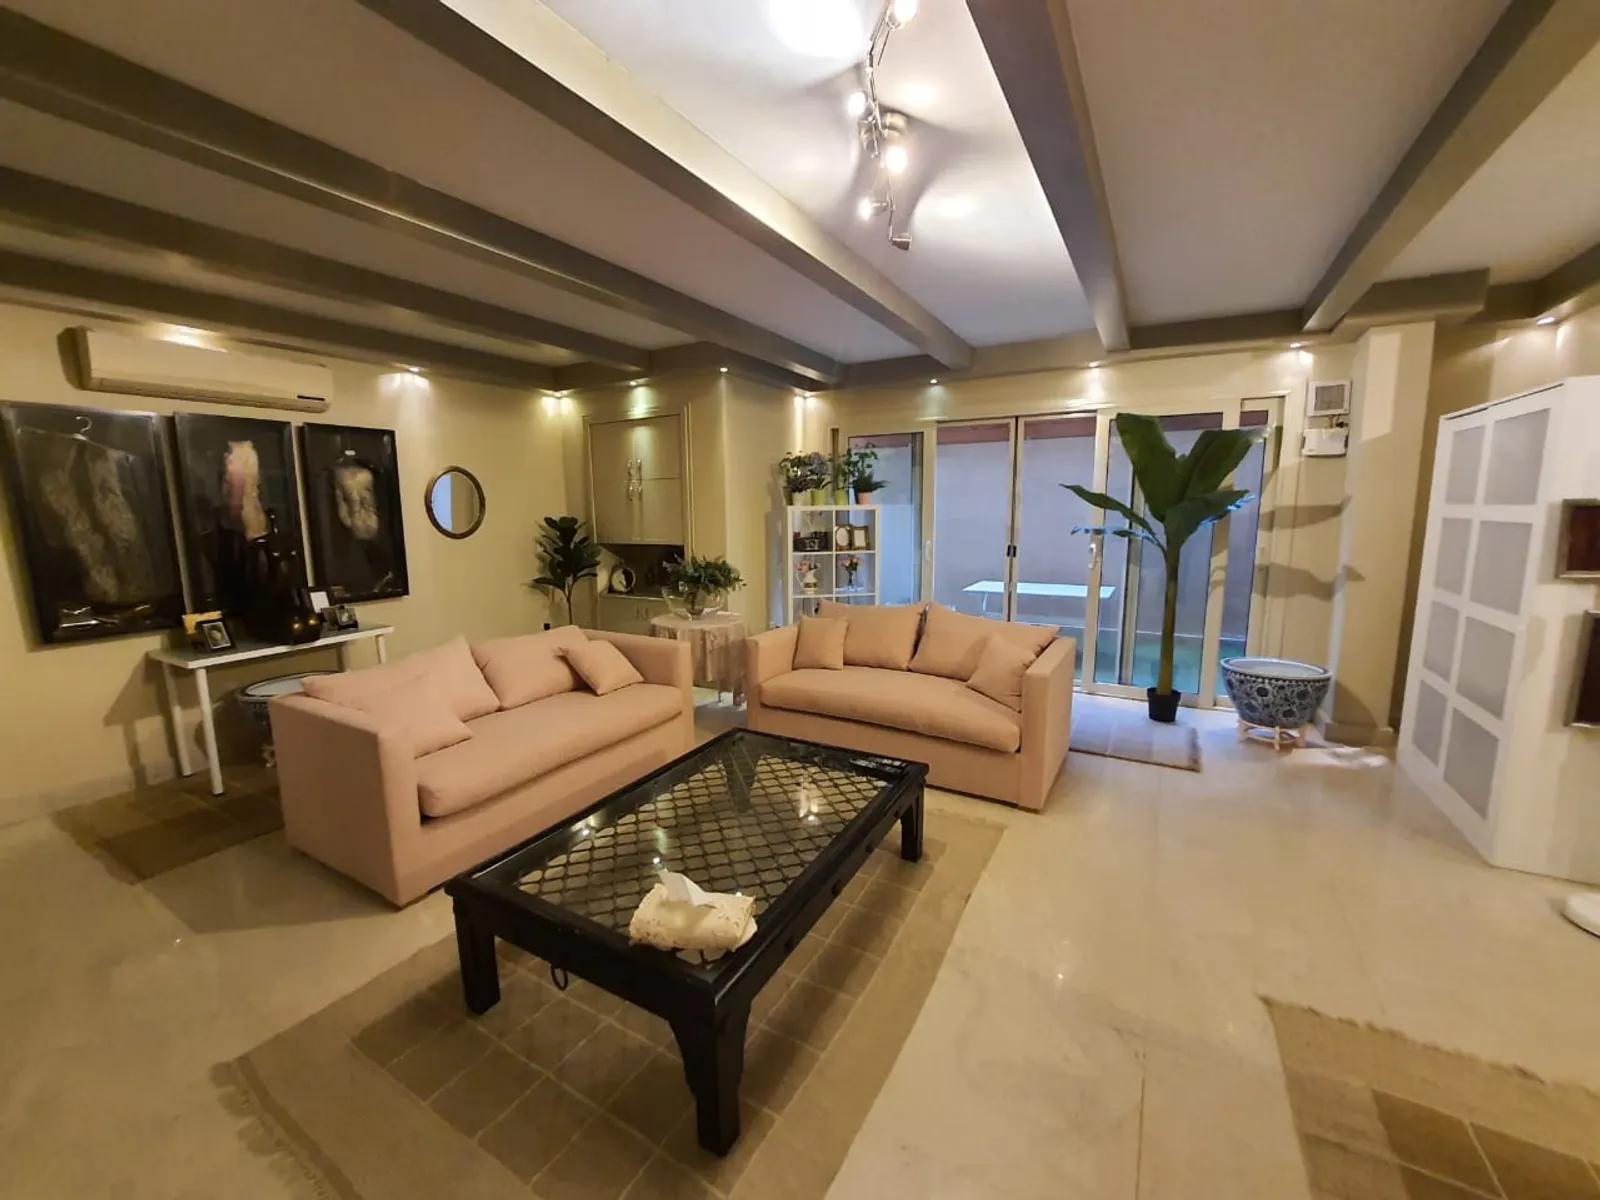 Ground Floors For Sale In Maadi Maadi Sarayat Area: 170 m² consists of 2 Bedrooms 2 Bathrooms Furnished 5 stars #4904